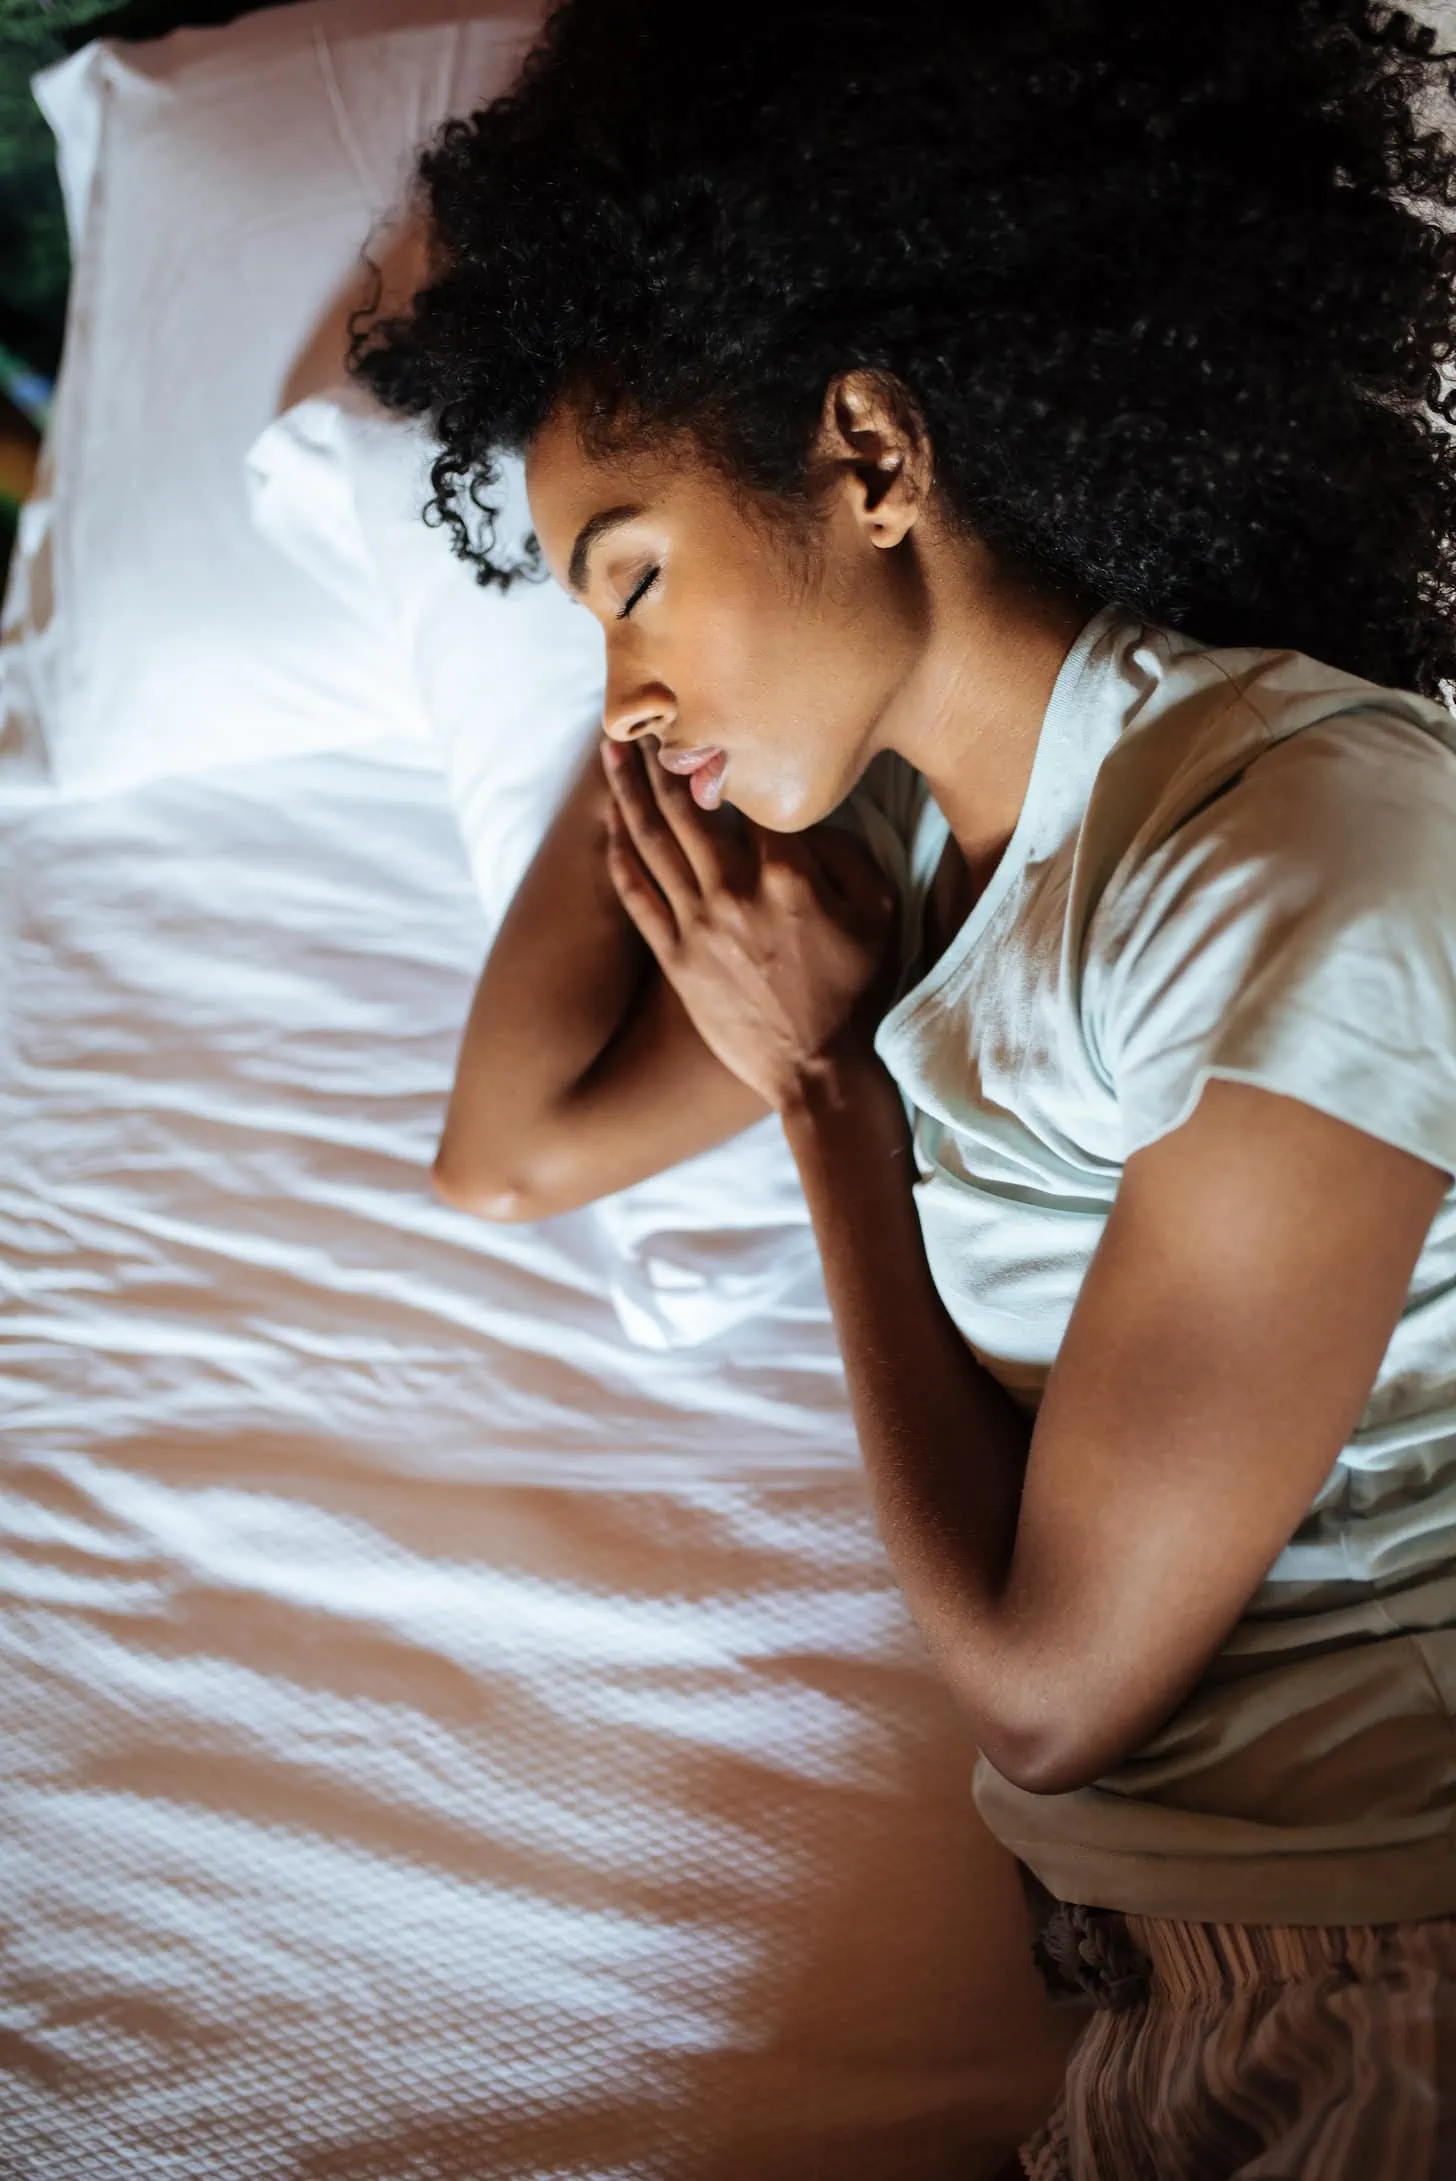 Beautiful black woman lying down in bed sleeping.